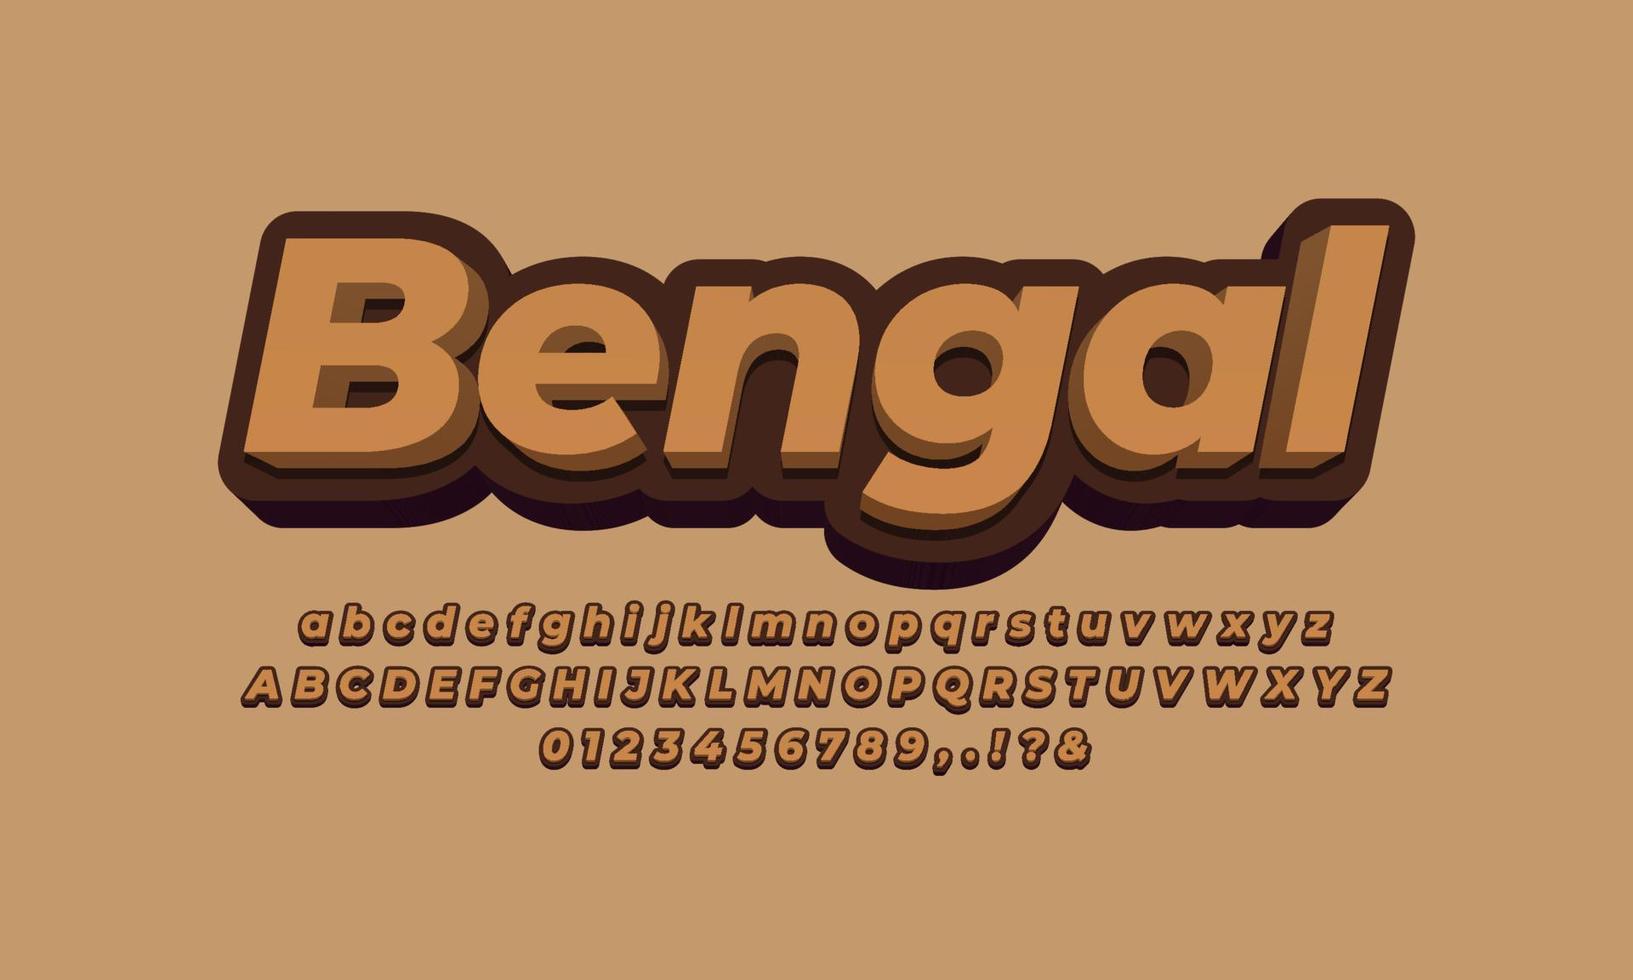 bengal cat skin palette text effect vector